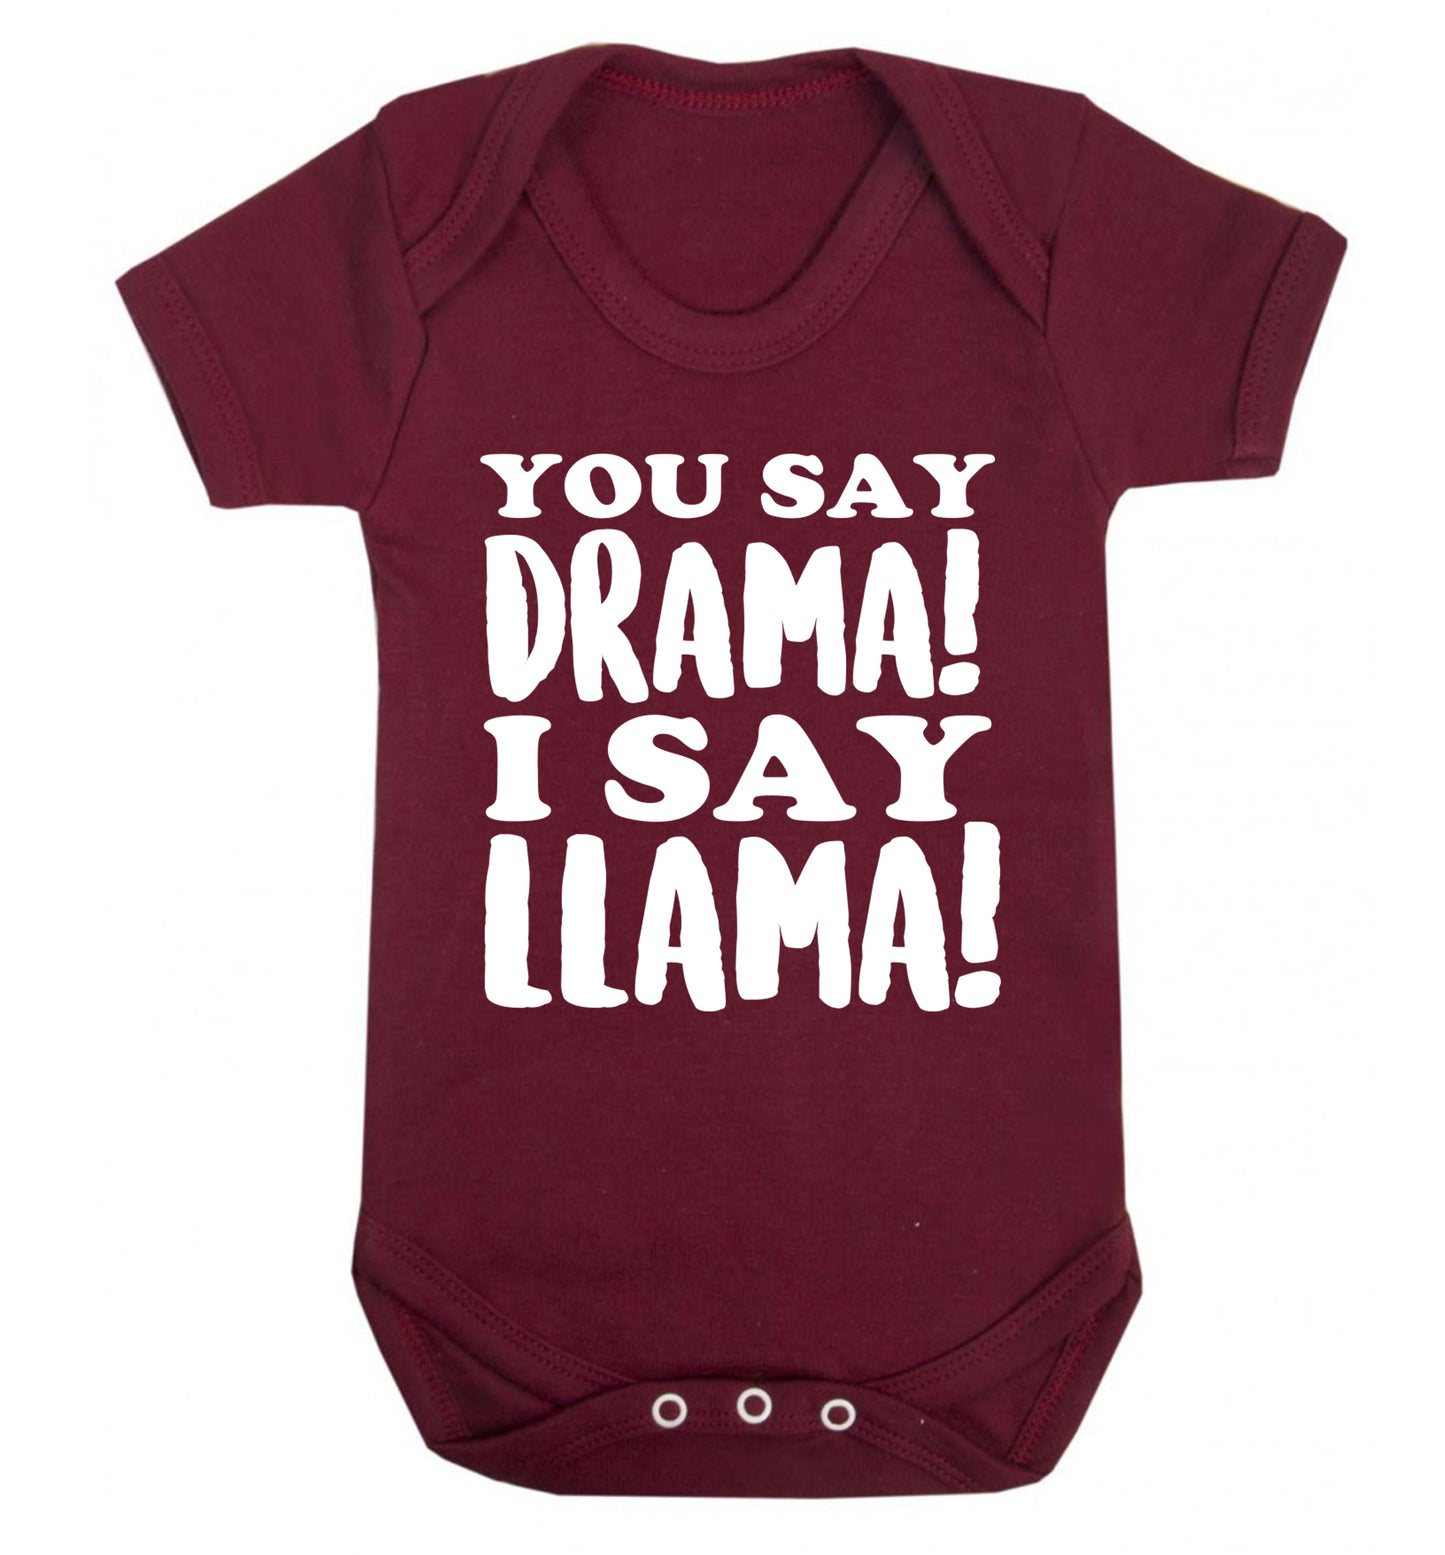 You say drama I say llama! Baby Vest maroon 18-24 months